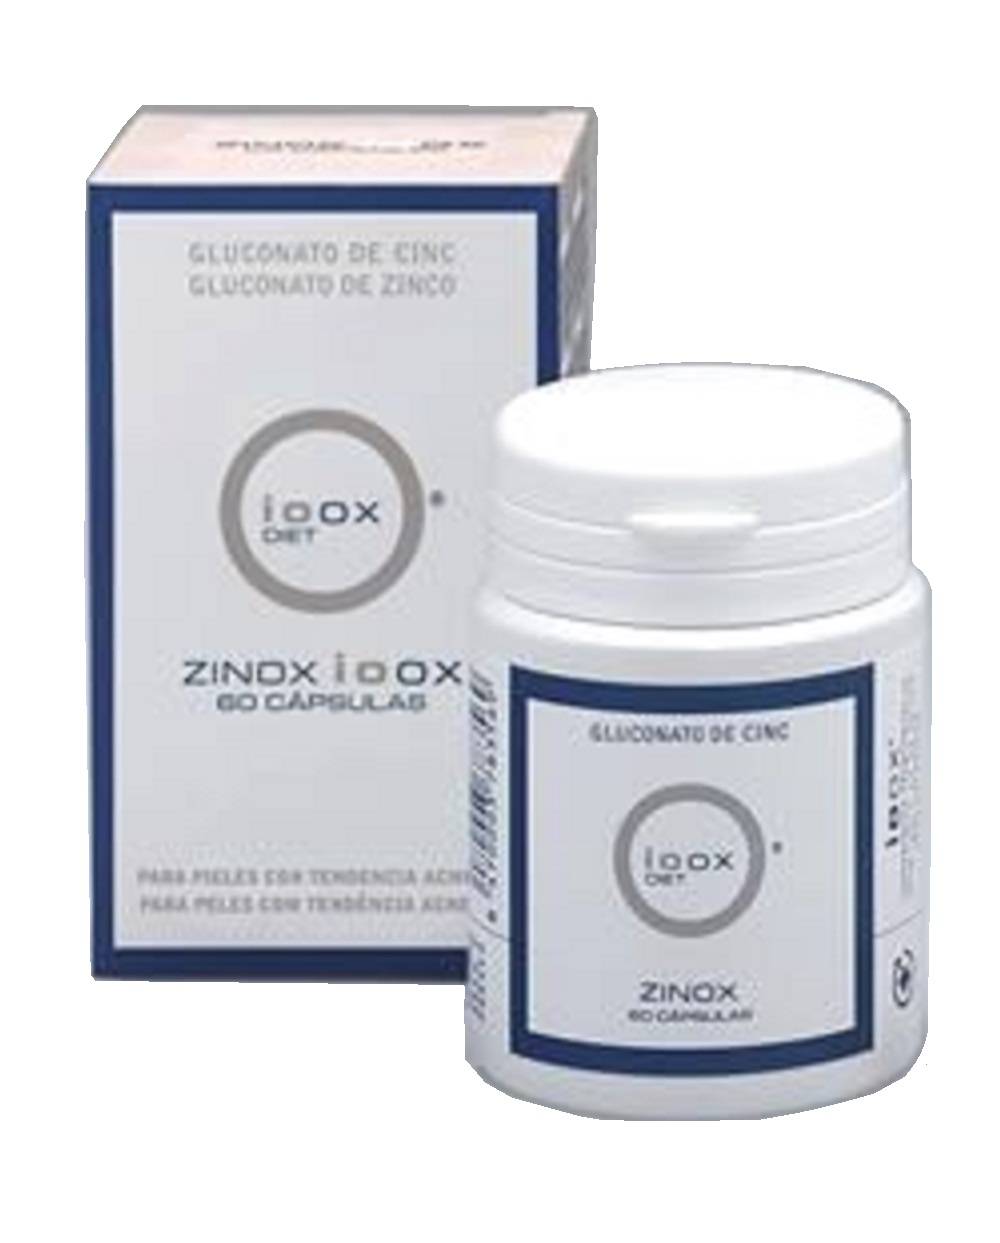 Zinox ioox - 60 cápsulas